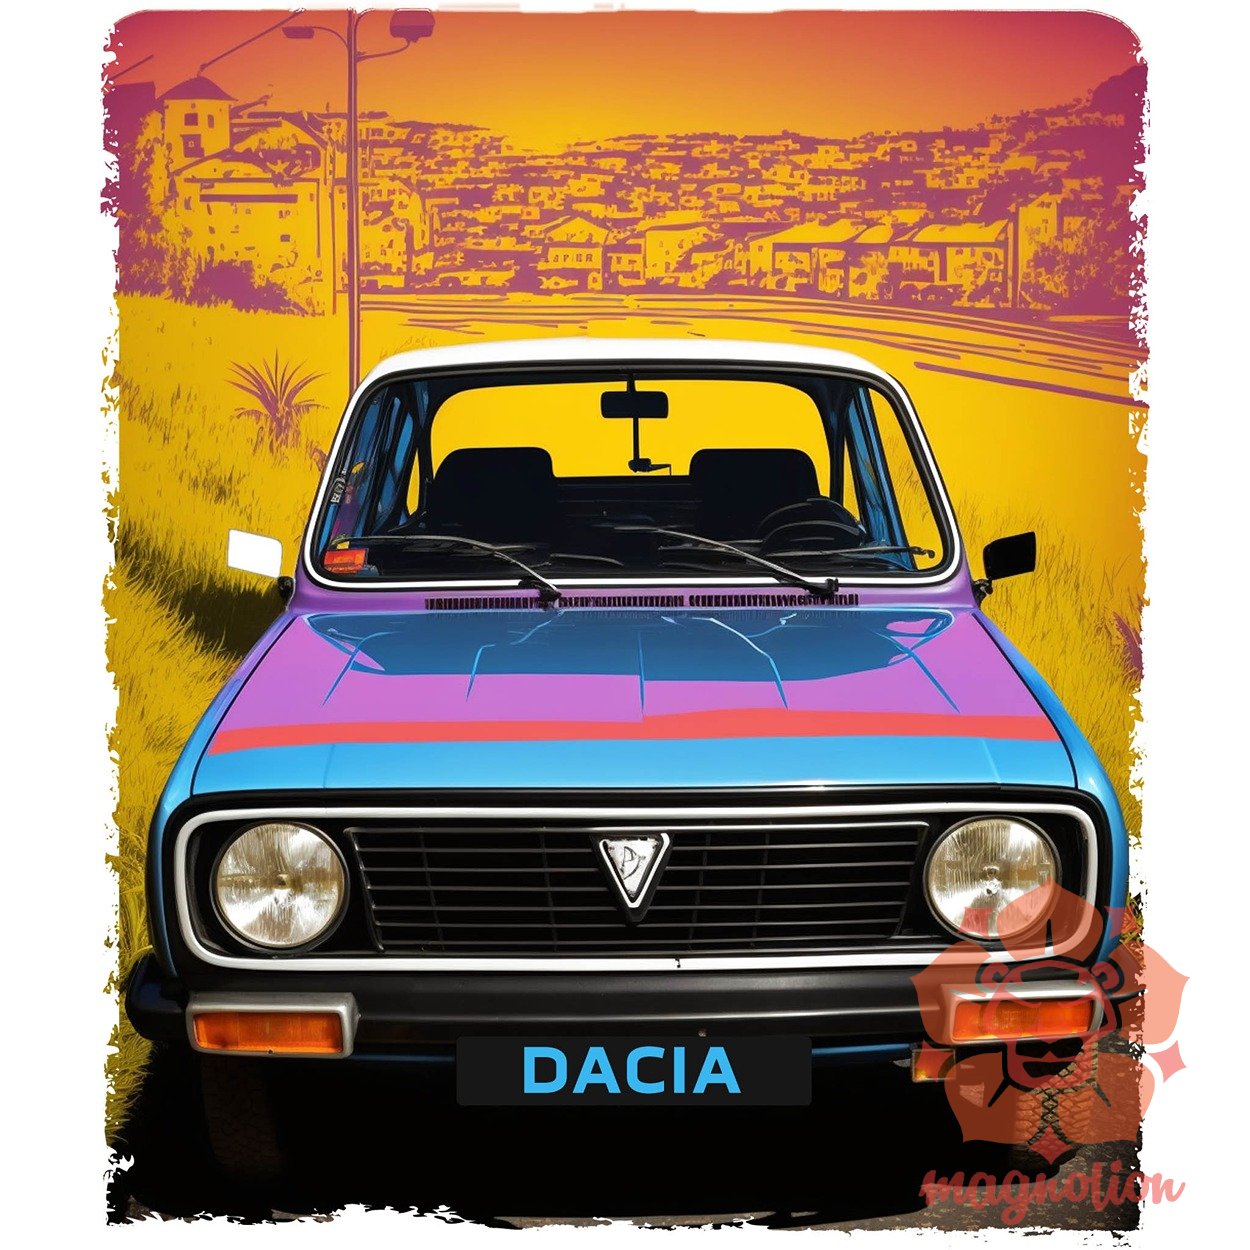 Dacia v2